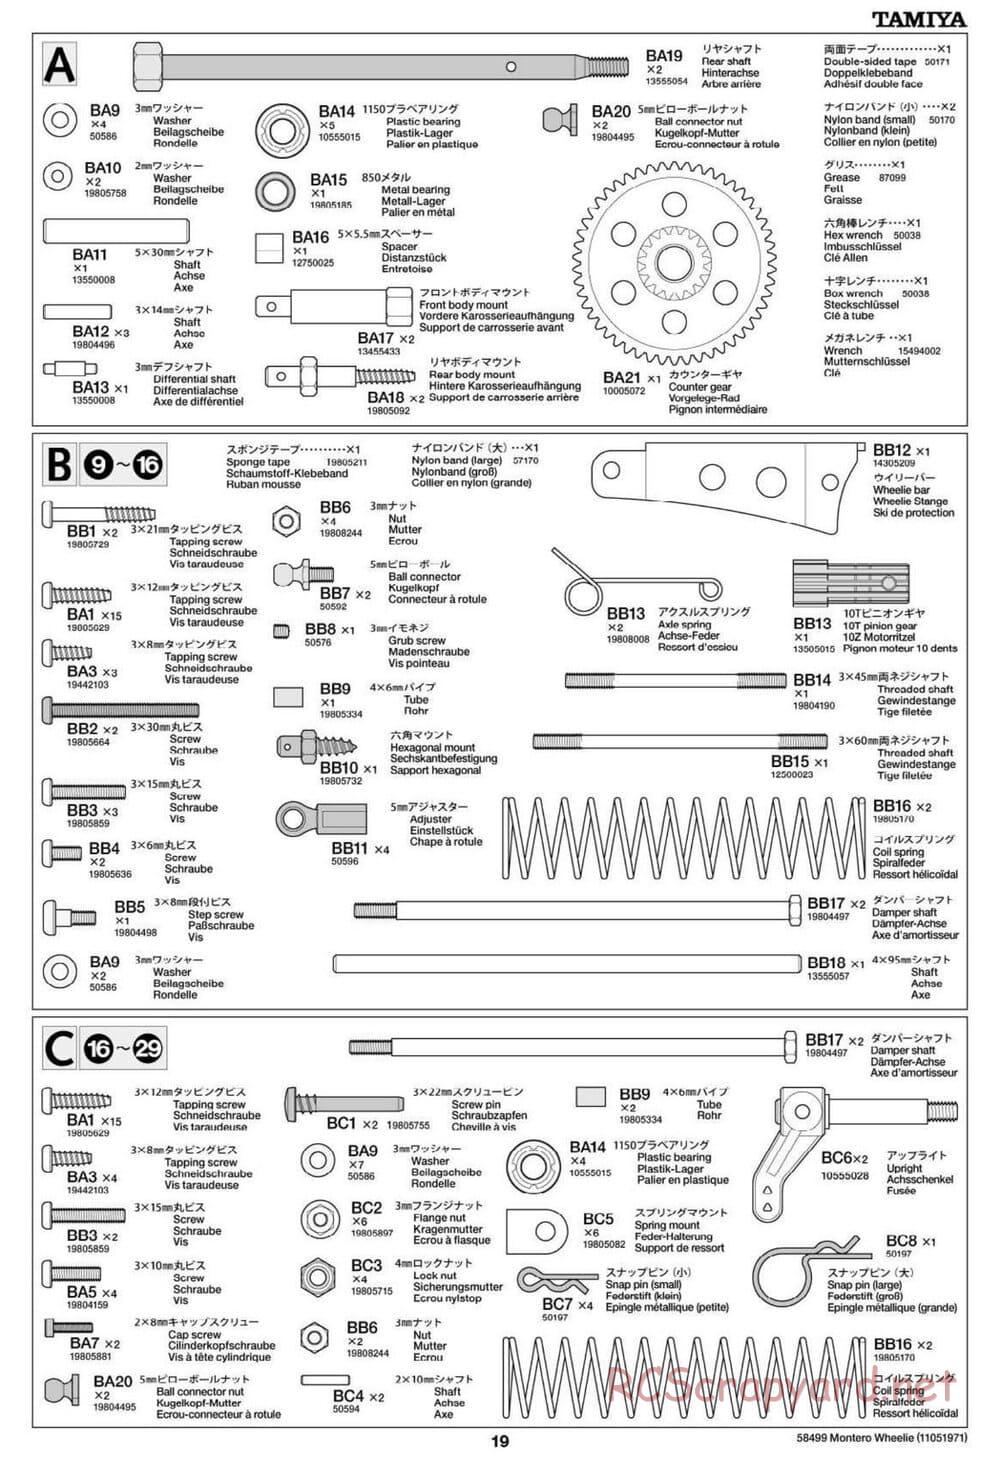 Tamiya - Mitsubishi Montero Wheelie - CW-01 Chassis - Manual - Page 19